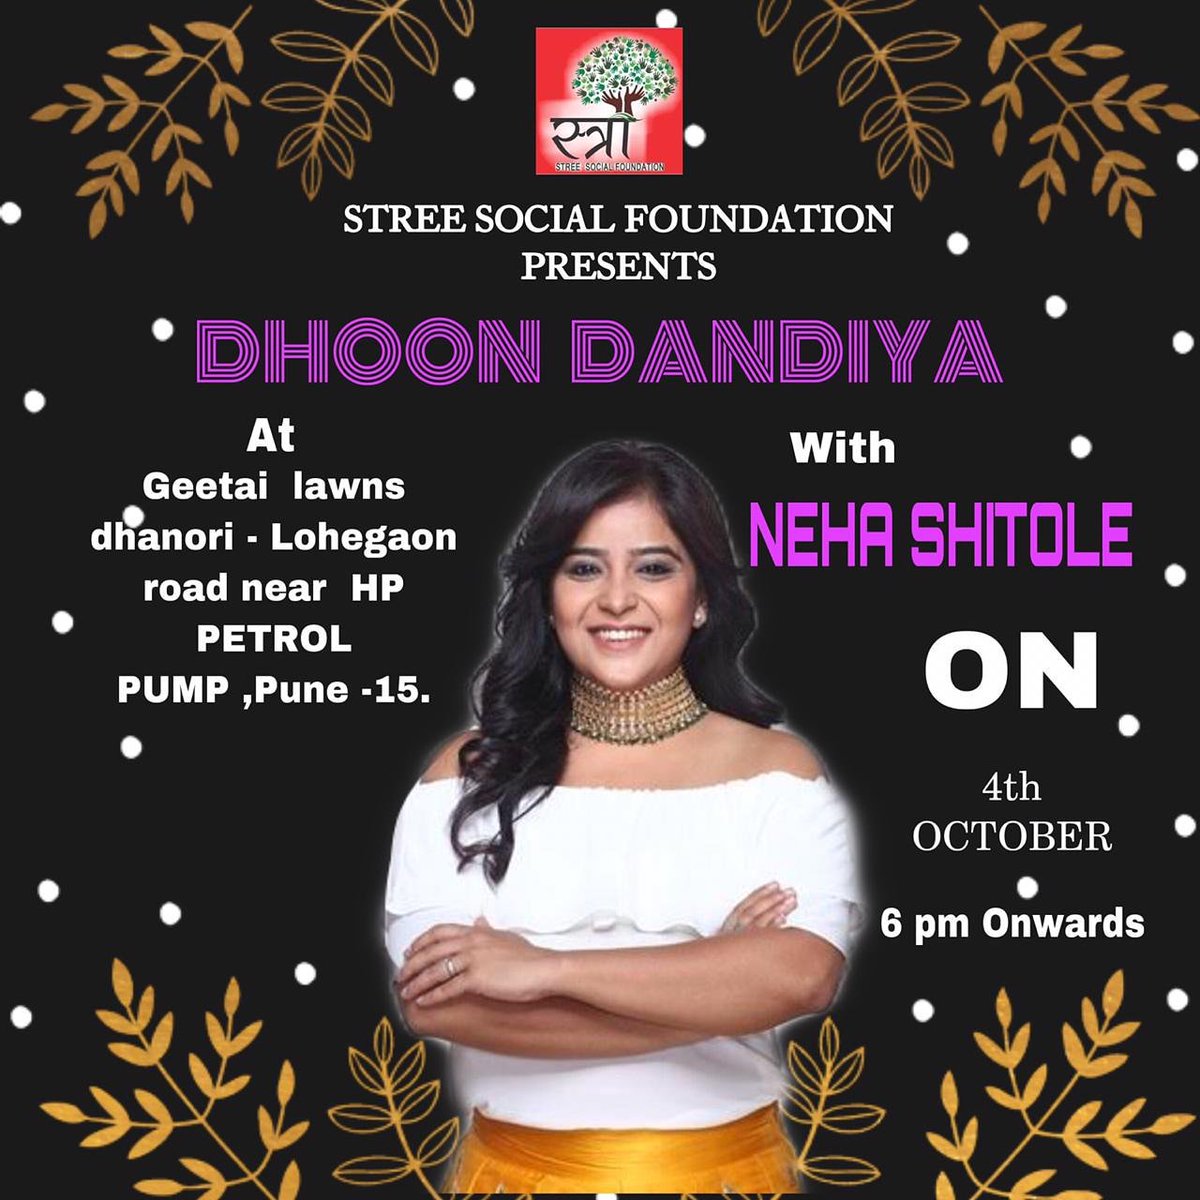 Come to dance and celebrate with your own #dhakadgirl !!

#bedhakad #NehaWinningHearts #nehanachiket #Nehashitole #mrskatekar #Yebaat